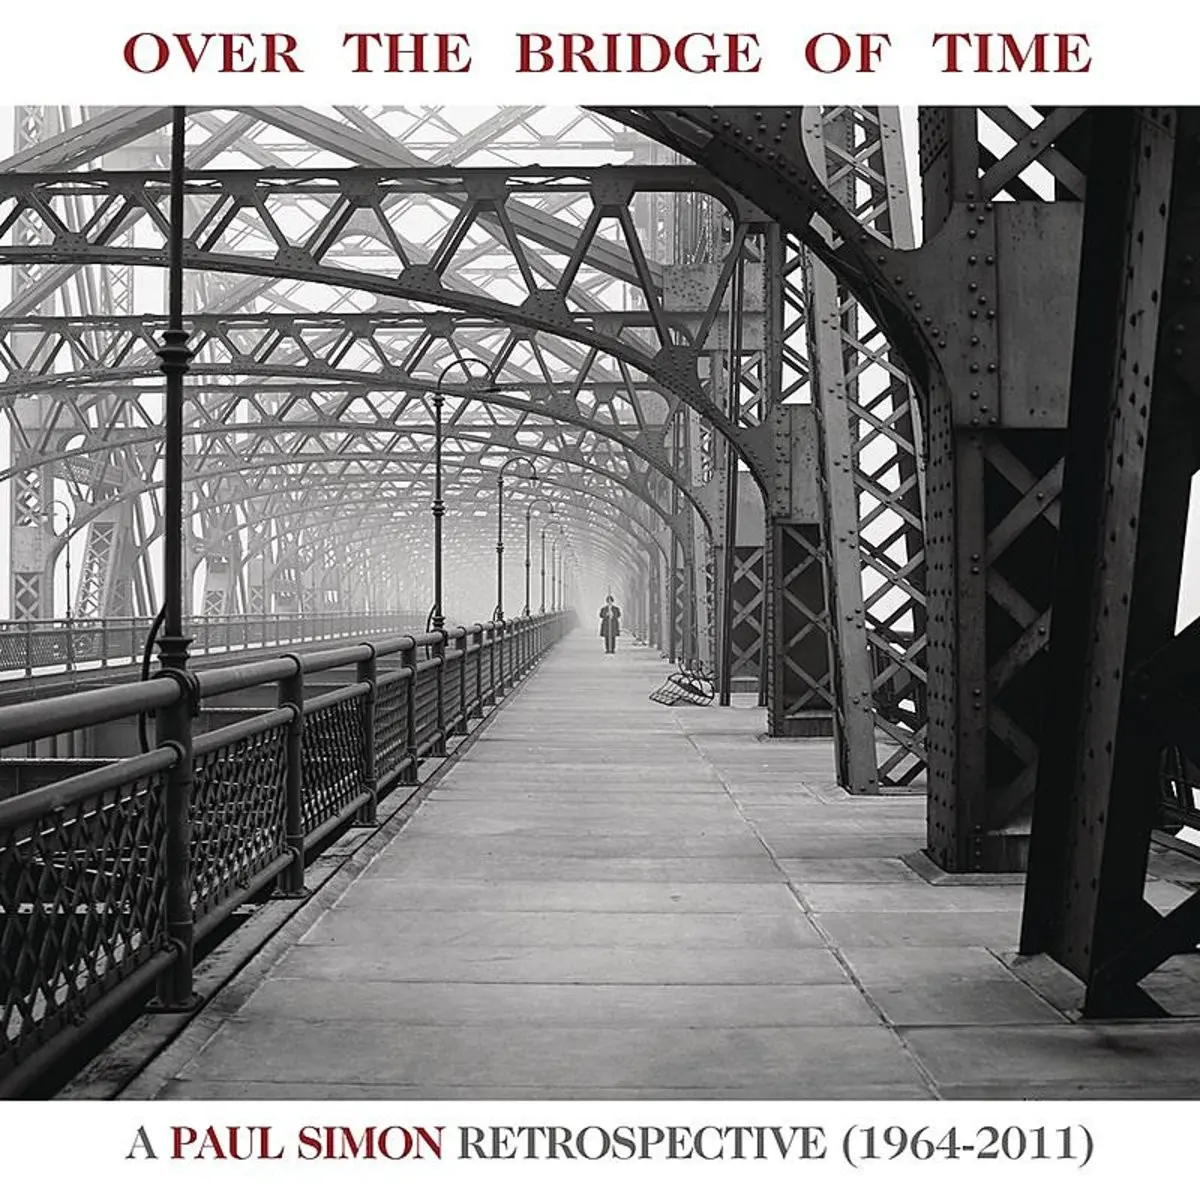 You Can Call Me Al Lyrics In English Over The Bridge Of Time A Paul Simon Retrospective 1964 11 You Can Call Me Al Song Lyrics In English Free Online On Gaana Com